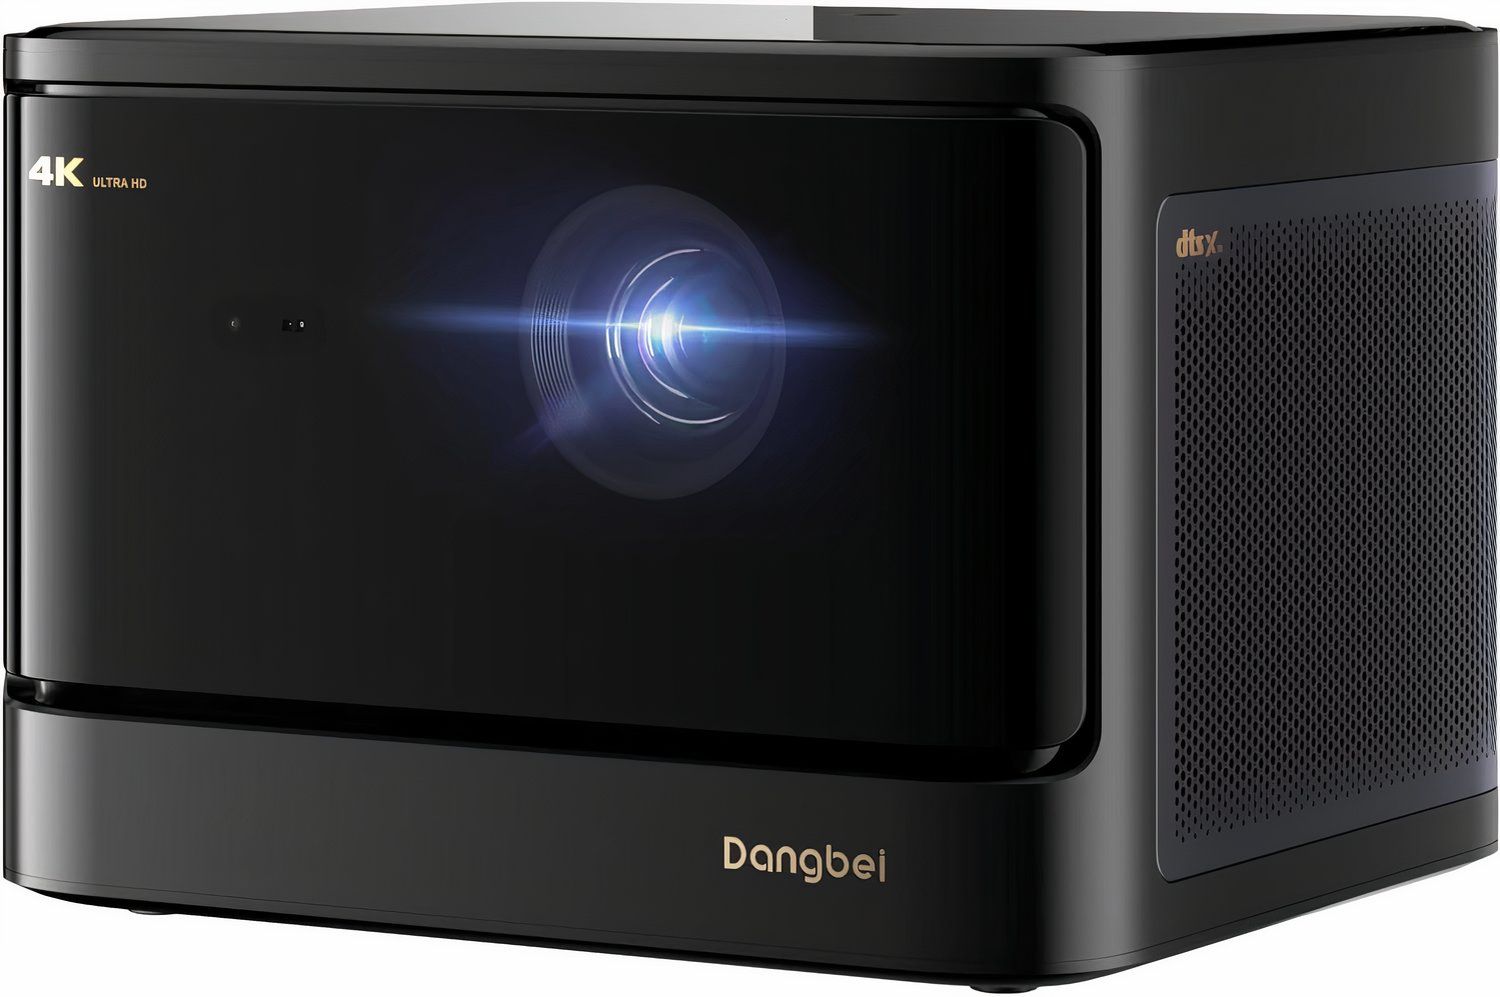 Dangbei DBOX02 (Mars Pro 2) Laser Projector